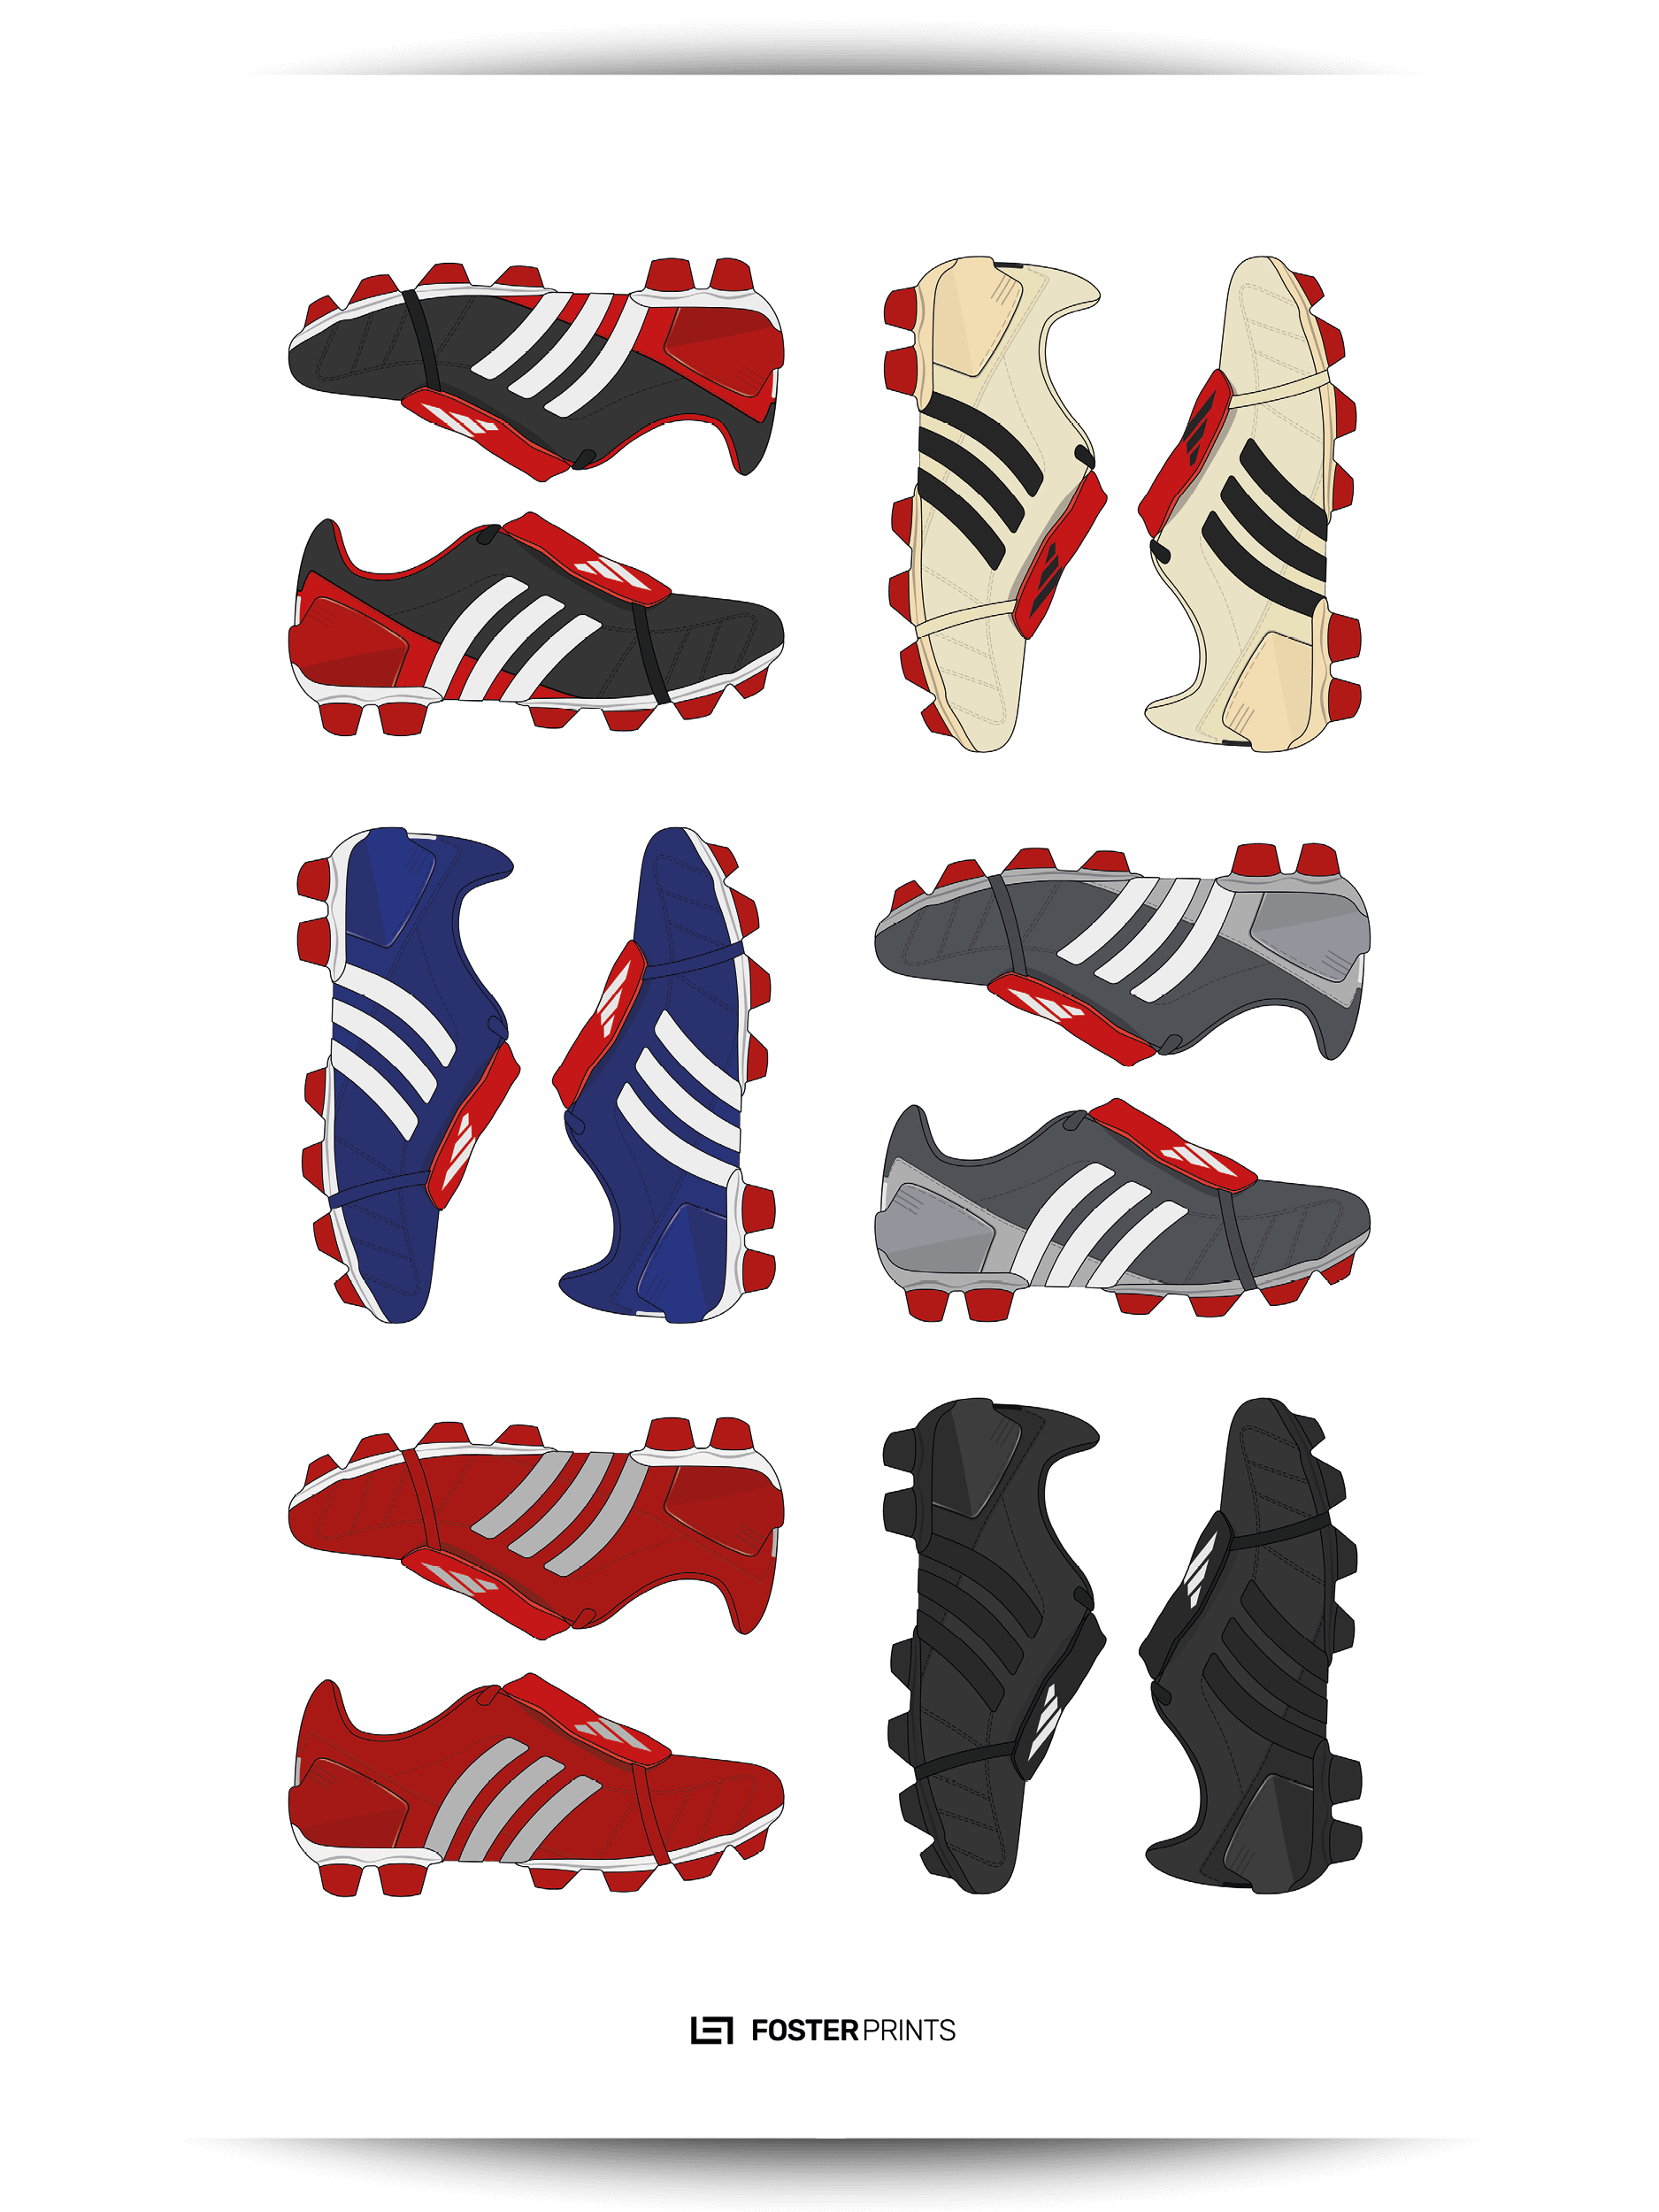 predator mania football boots